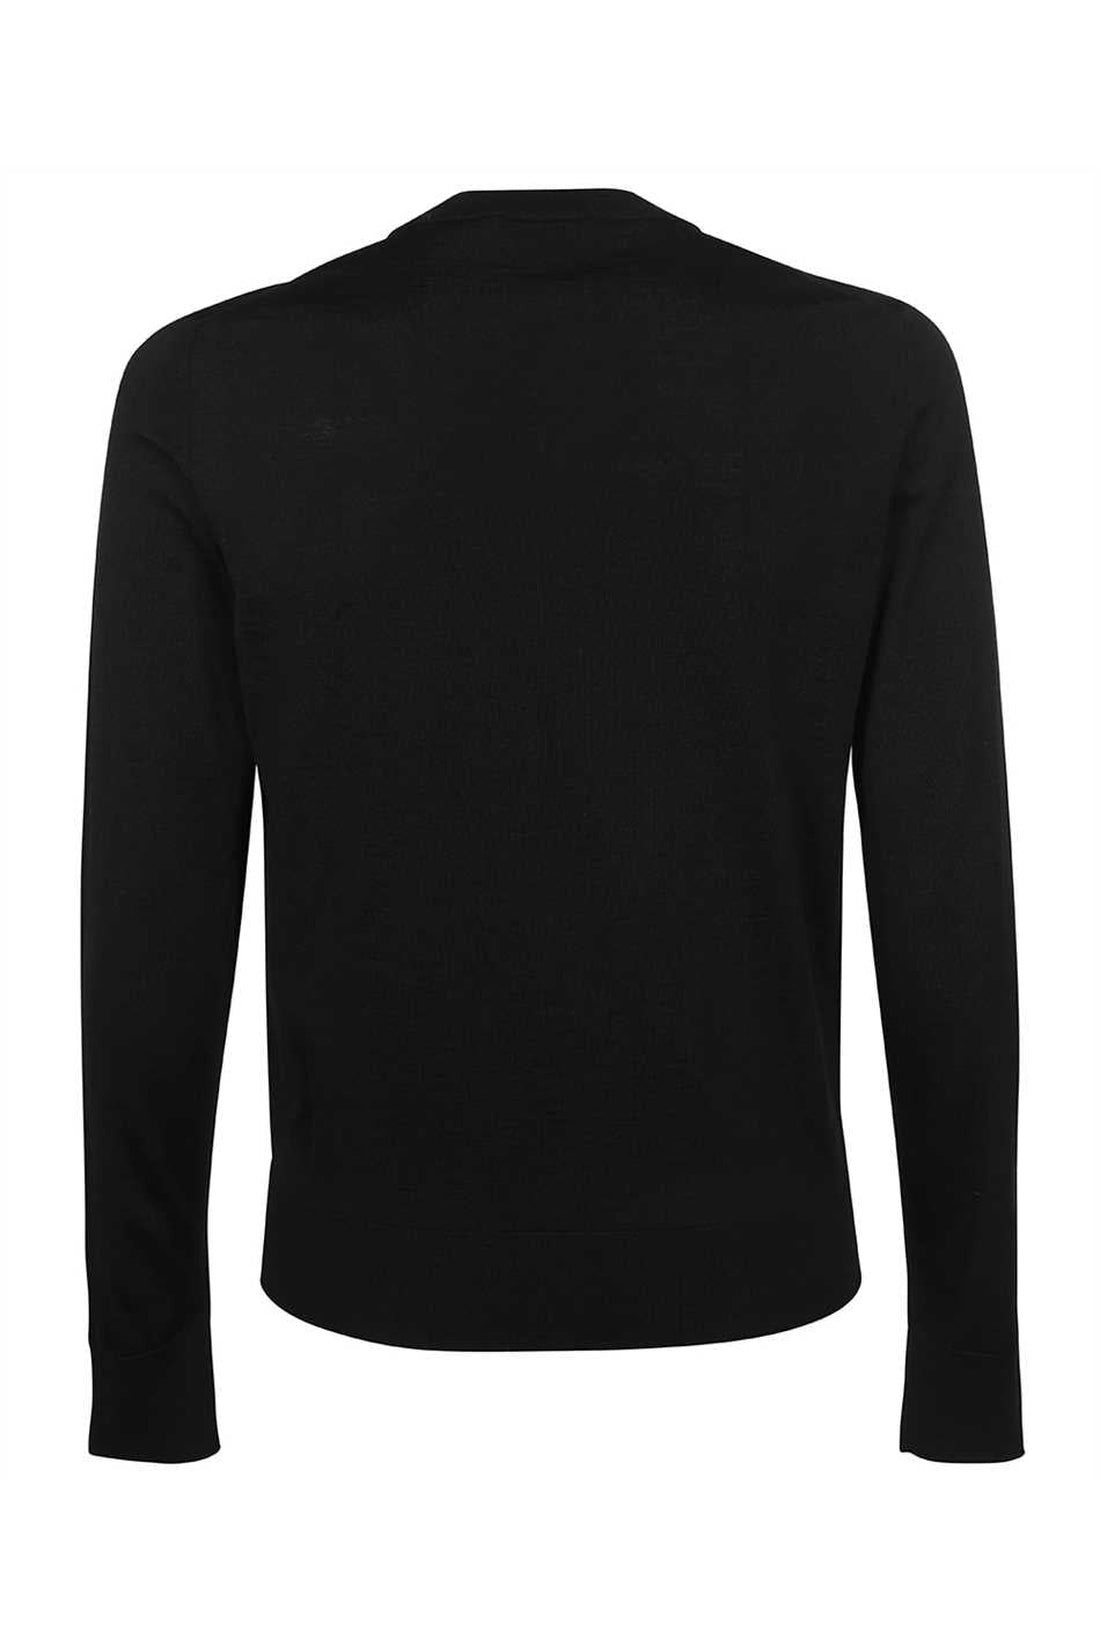 Dolce & Gabbana-OUTLET-SALE-Wool crew-neck sweater-ARCHIVIST